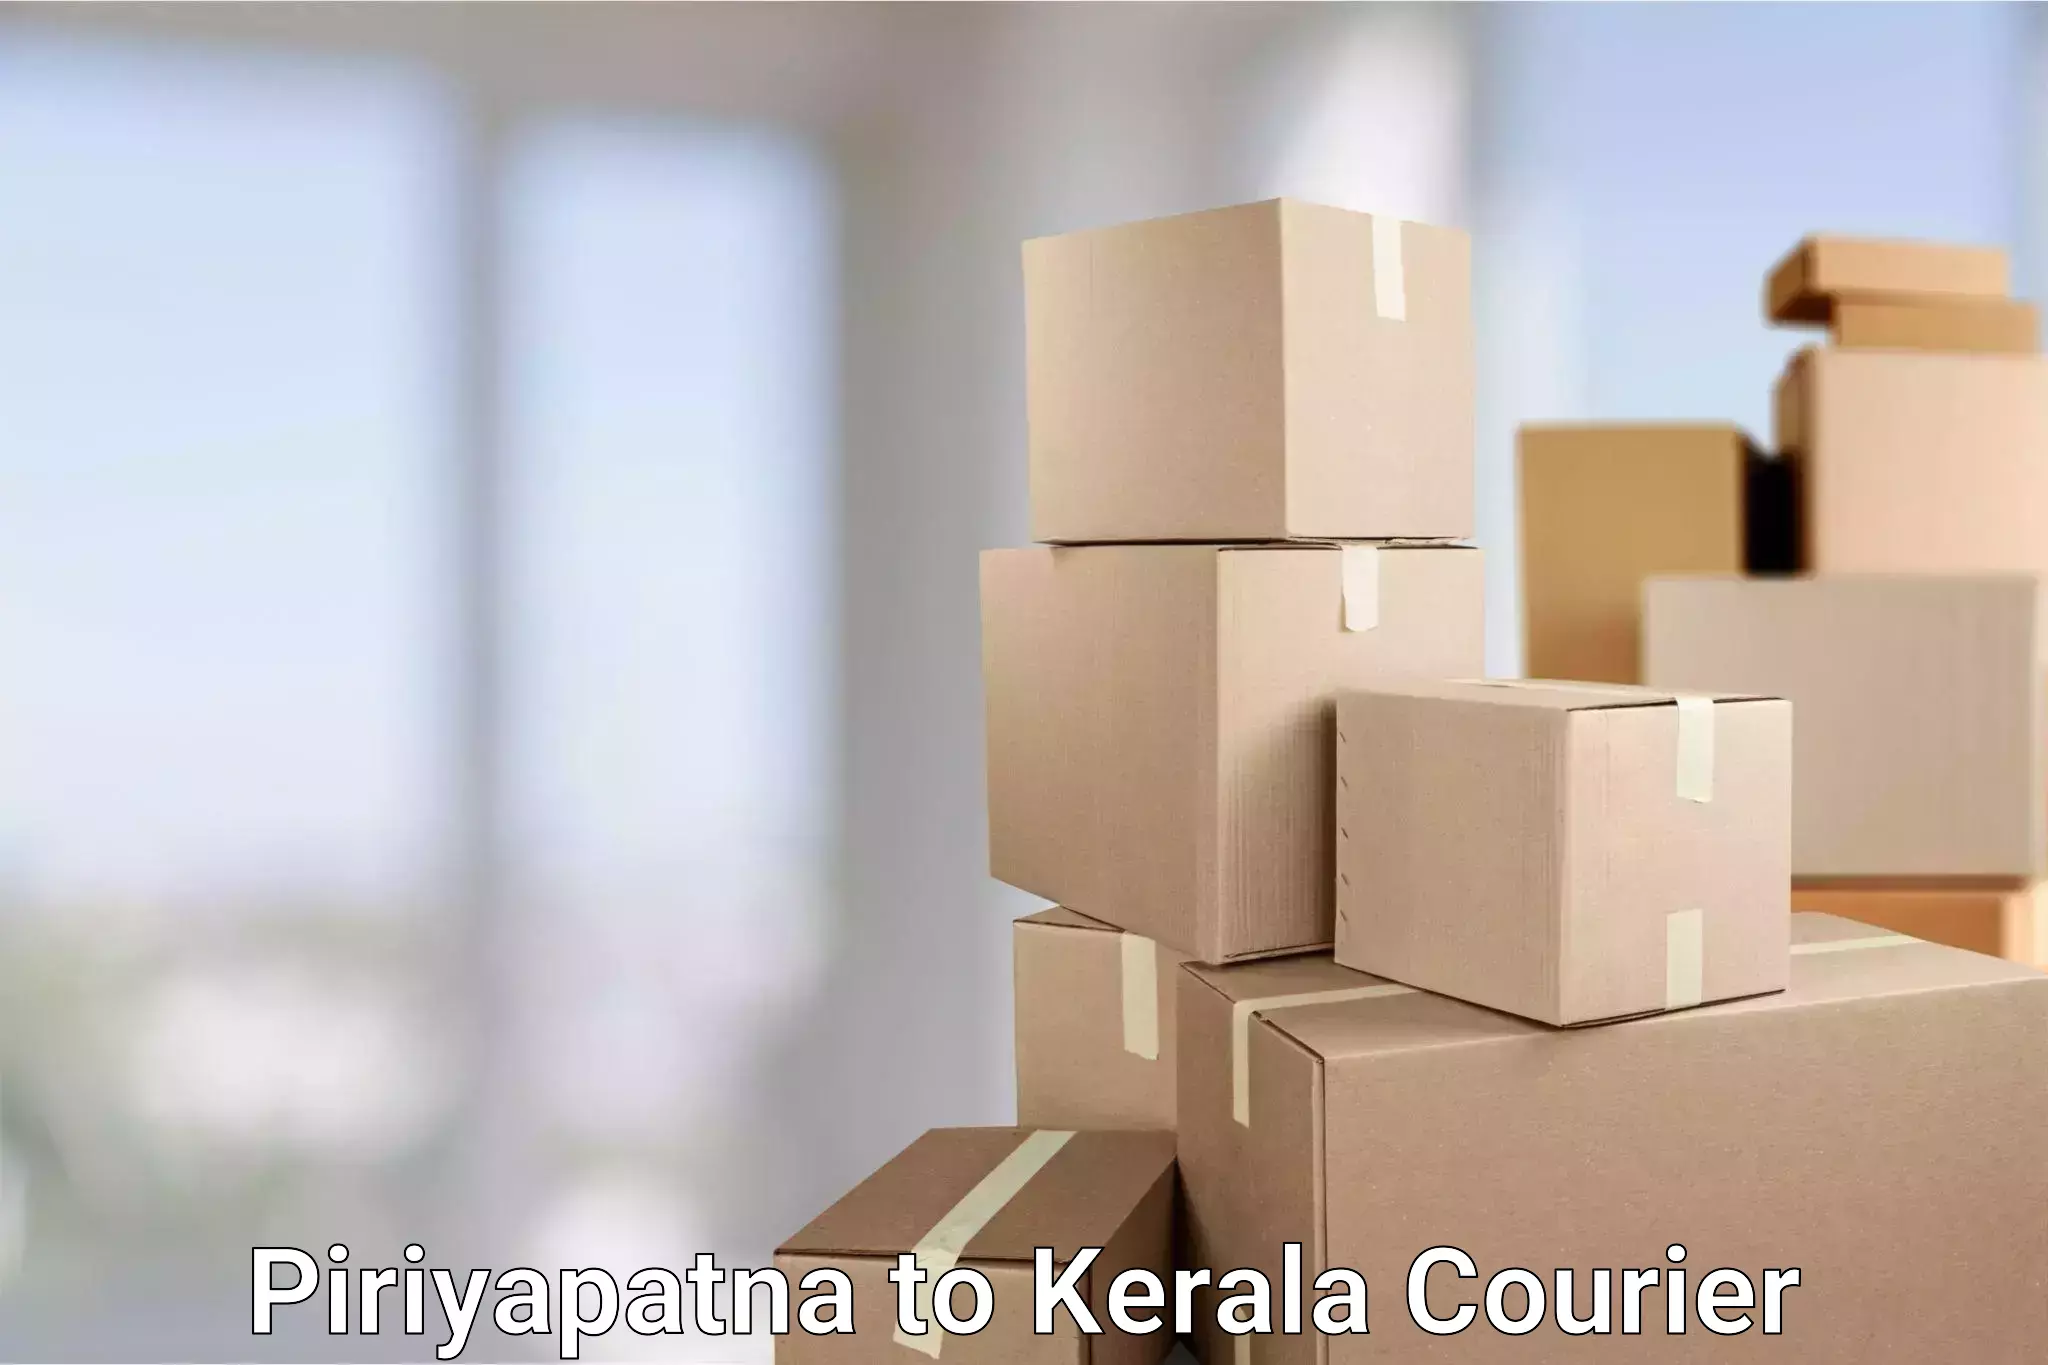 High-priority parcel service Piriyapatna to Kochi